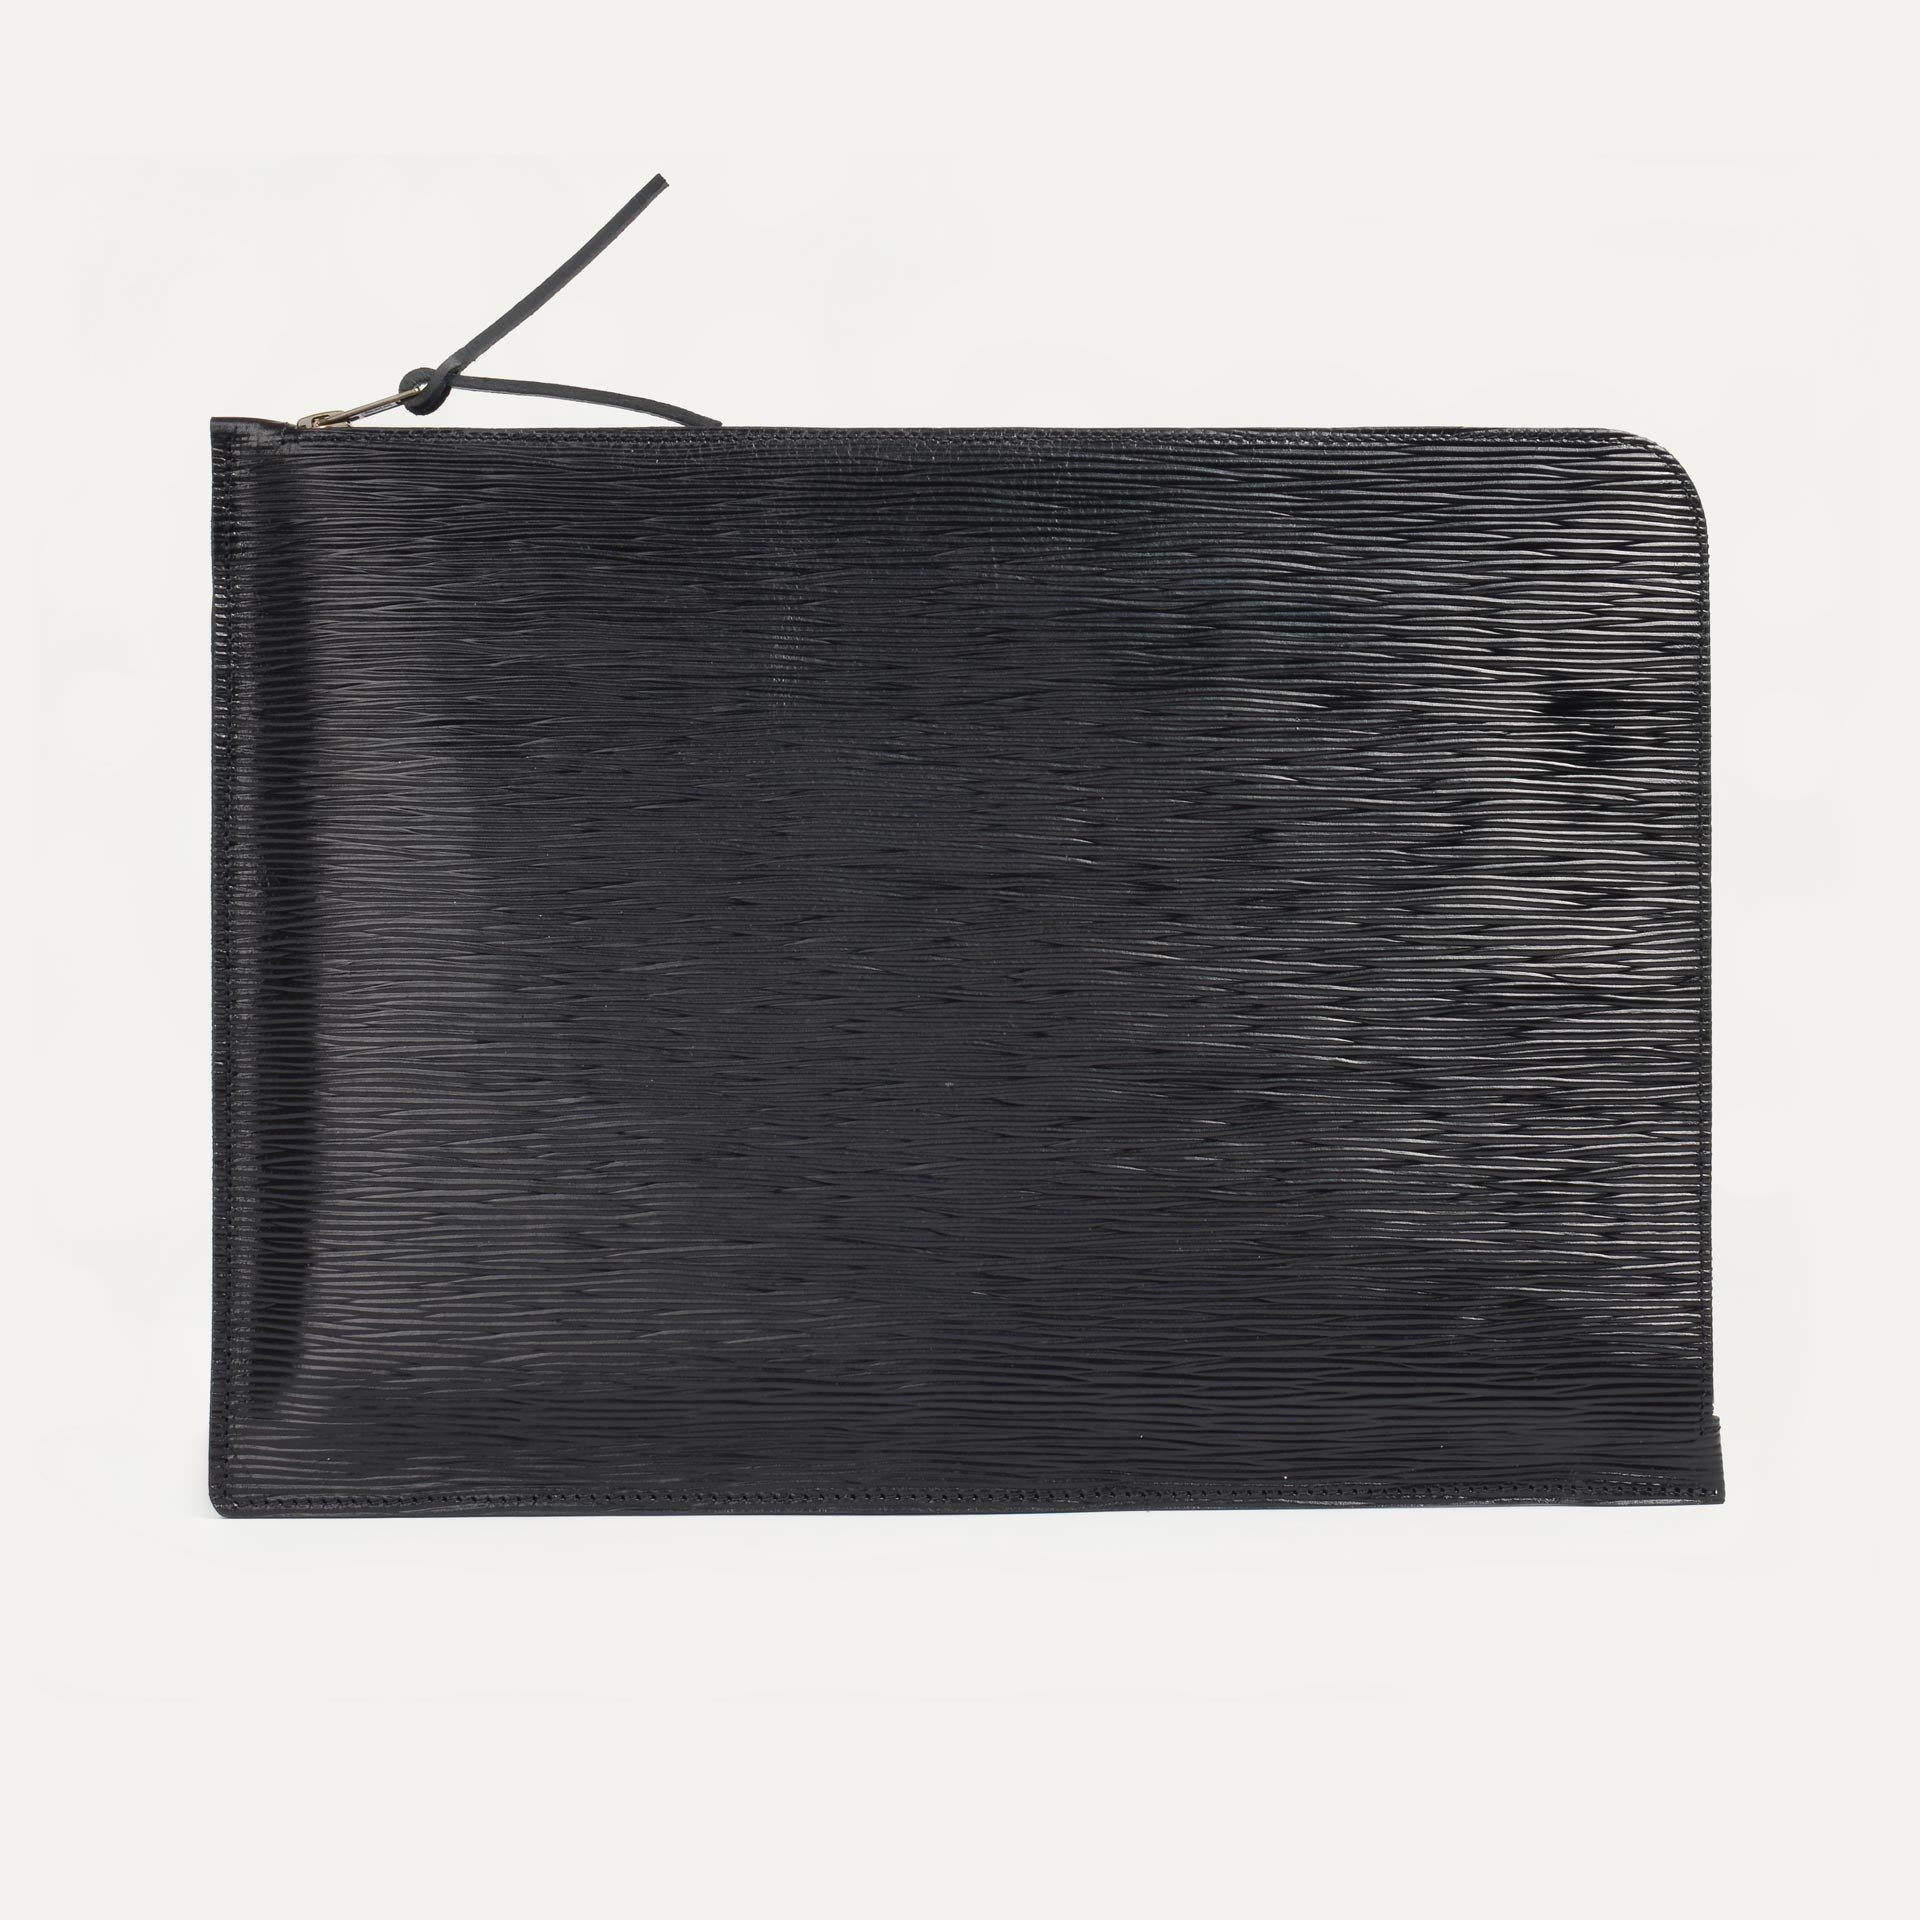 Jim Laptop sleeve 13” - black épi leather (image n°1)